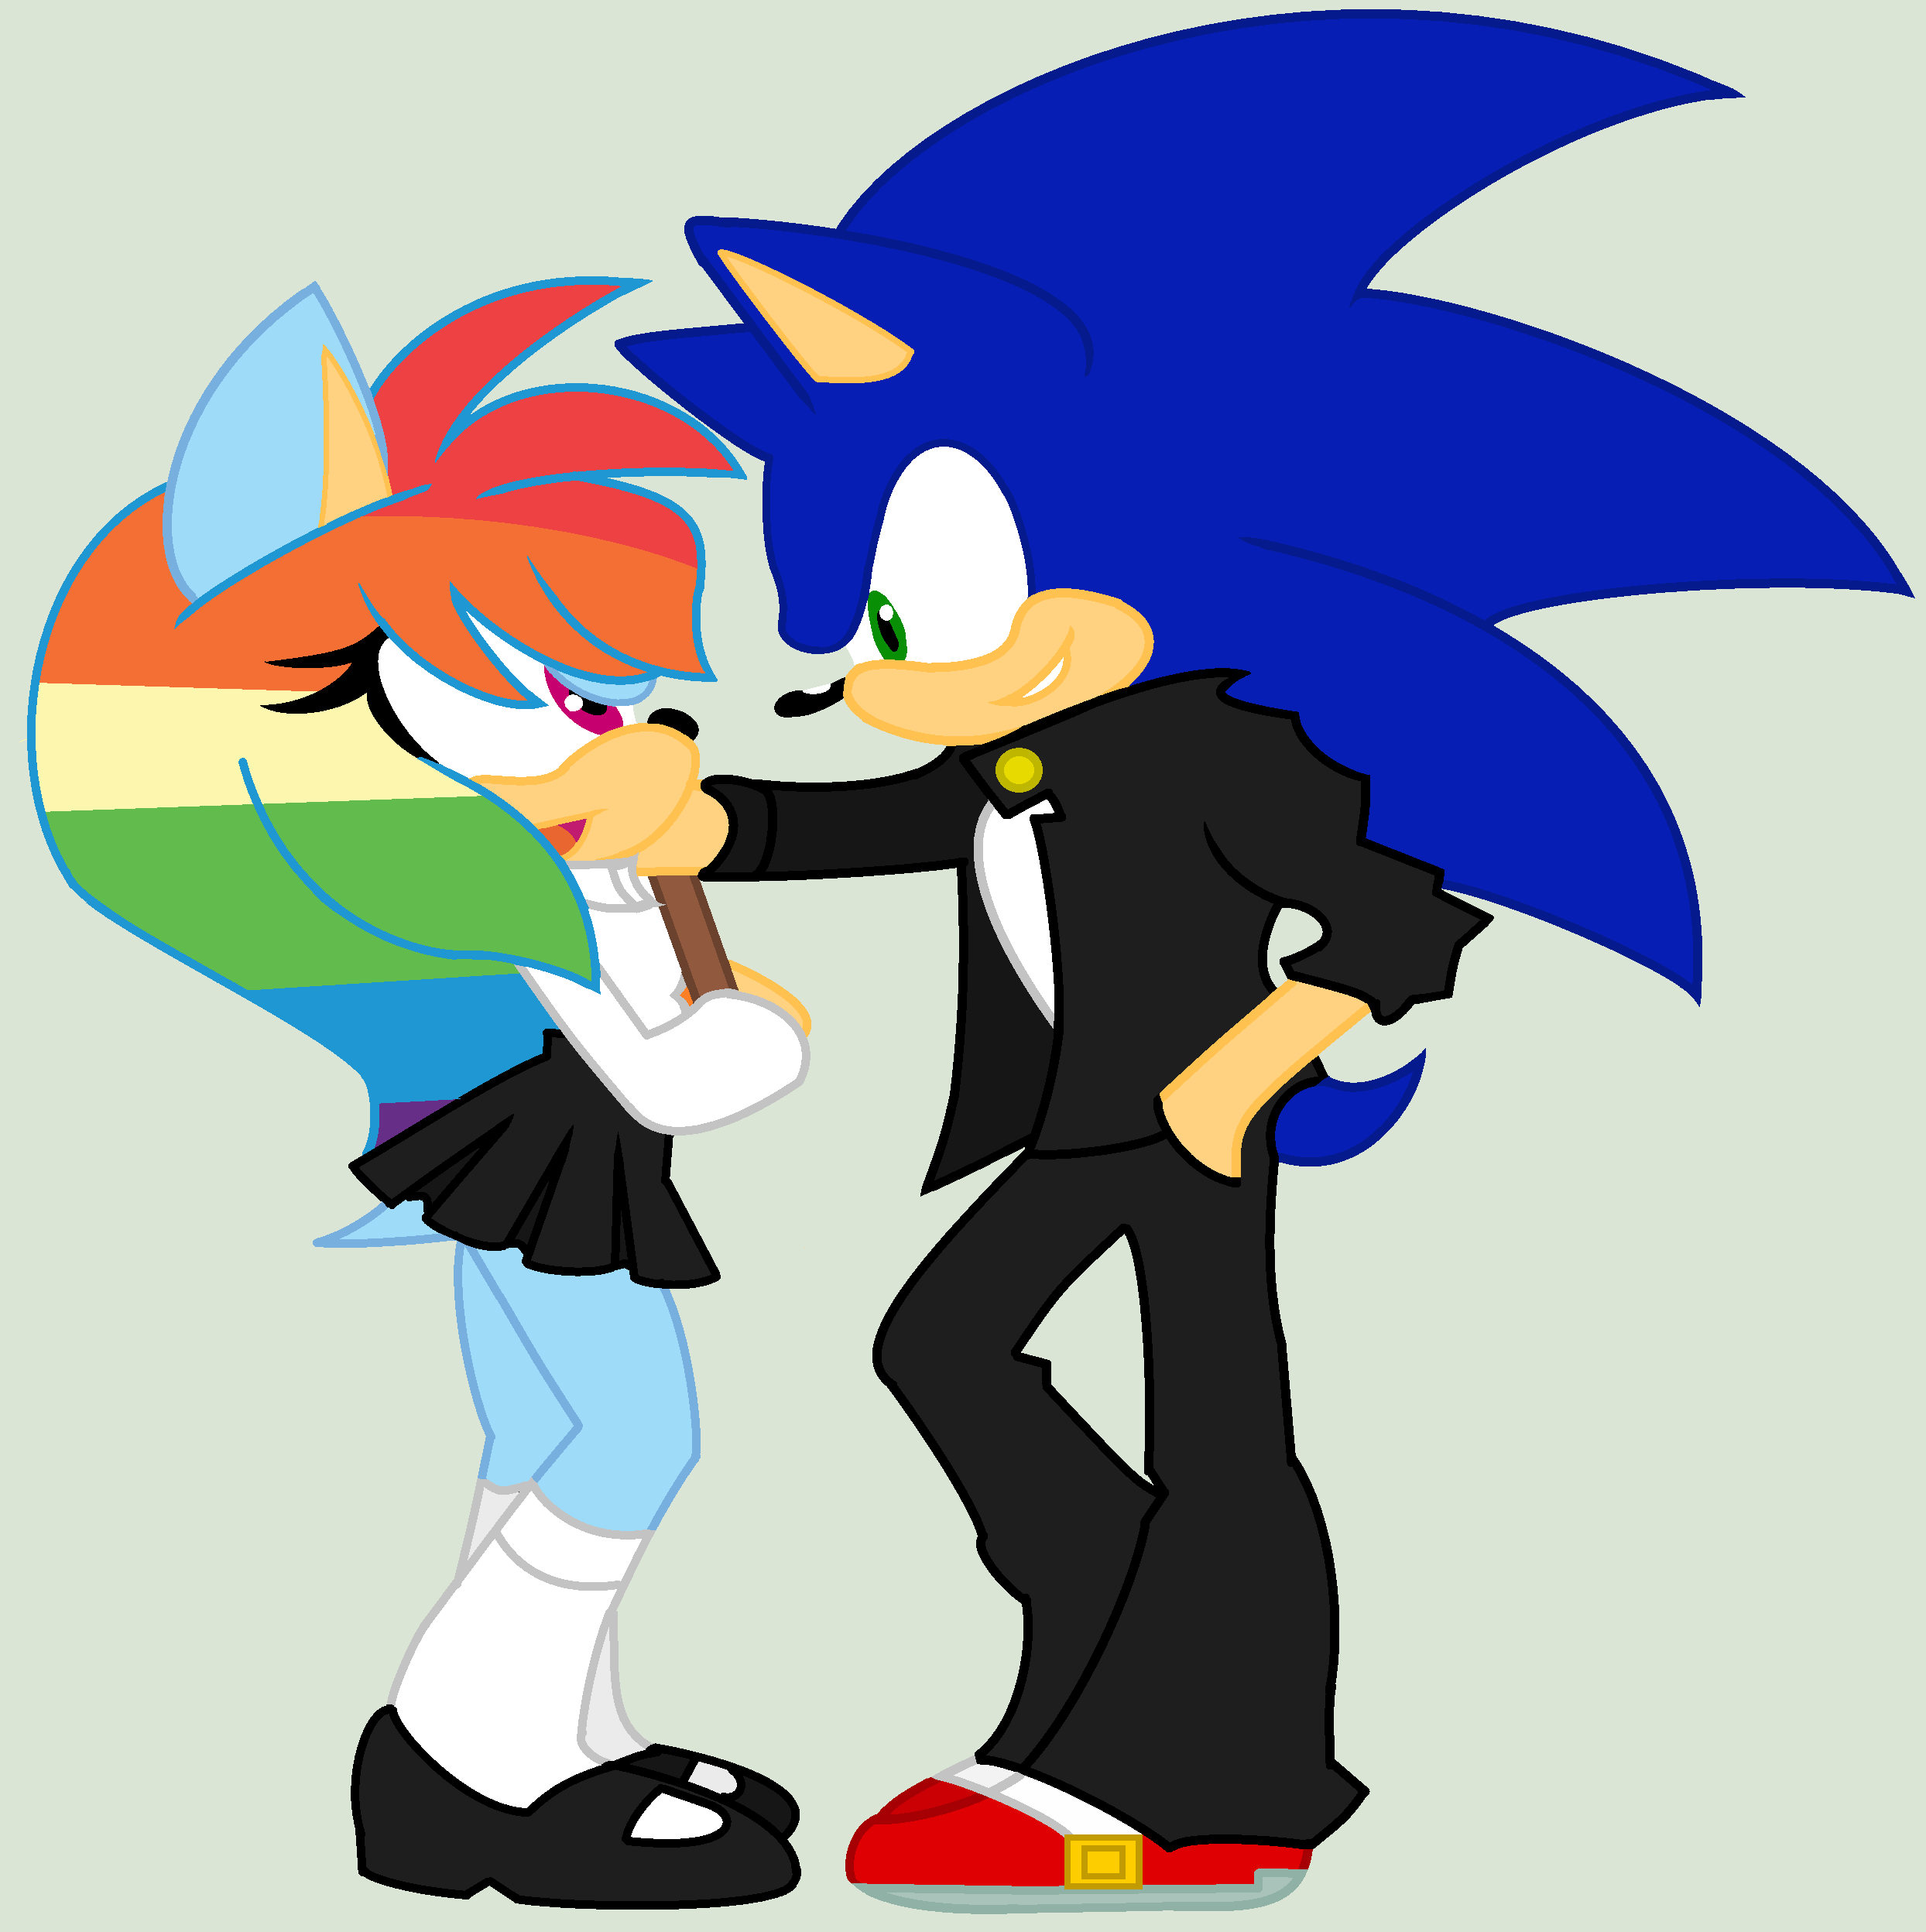 sonic and rainbow dash kiss